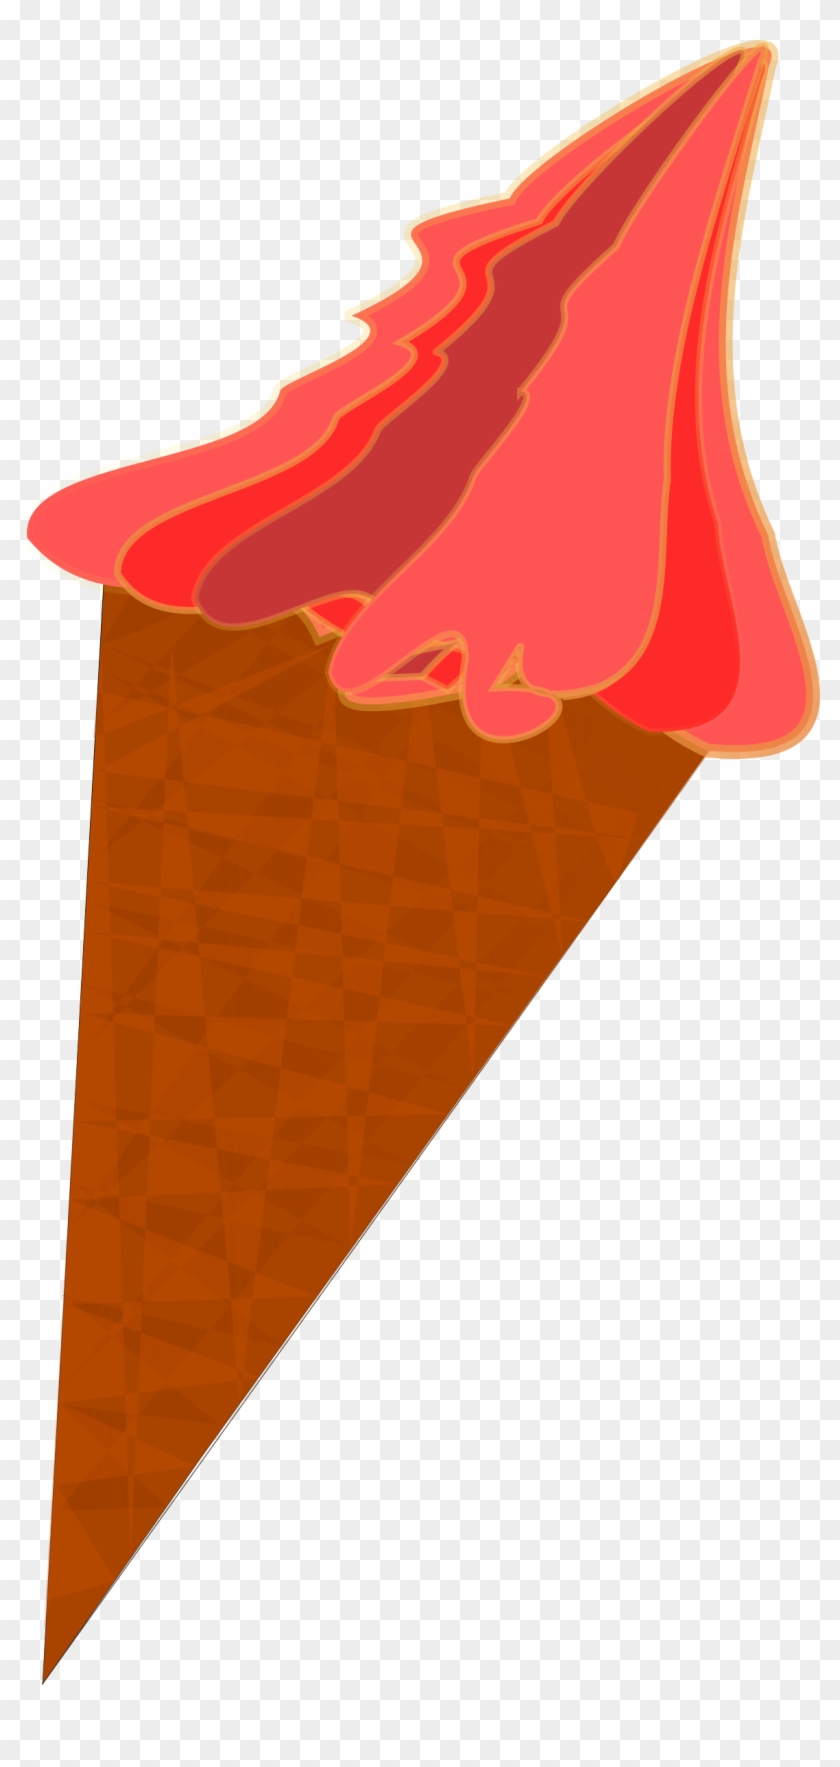 Ice Cream Cone - Red Ice Cream Cone #547686